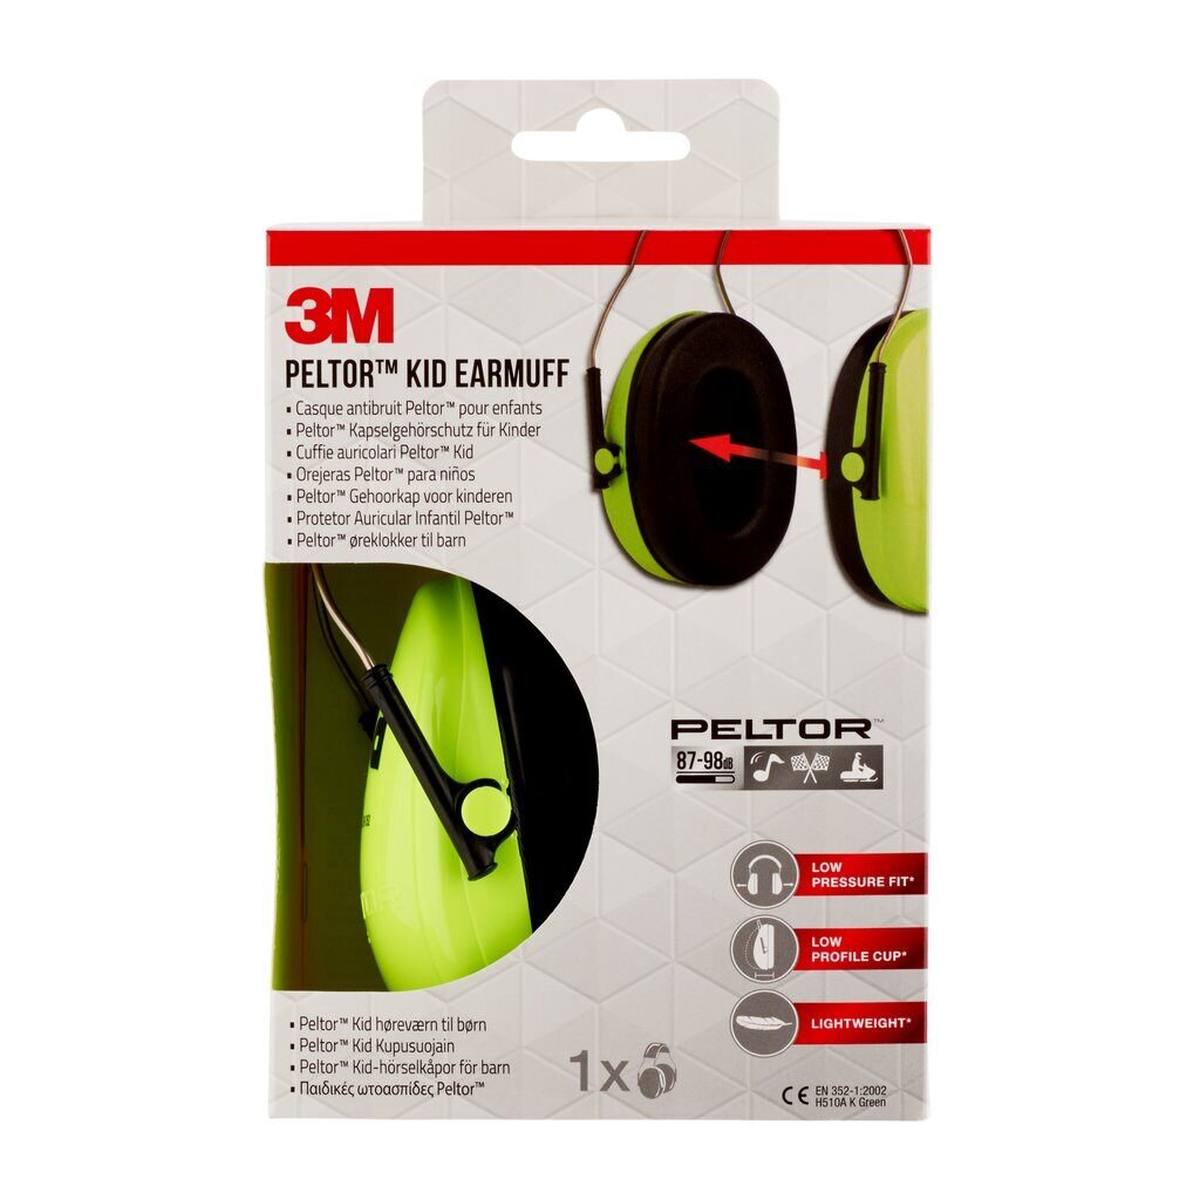 3M Peltor Kapselgehörschutz für Kinder H510AK, Neongrün (87 bis 98 dB)